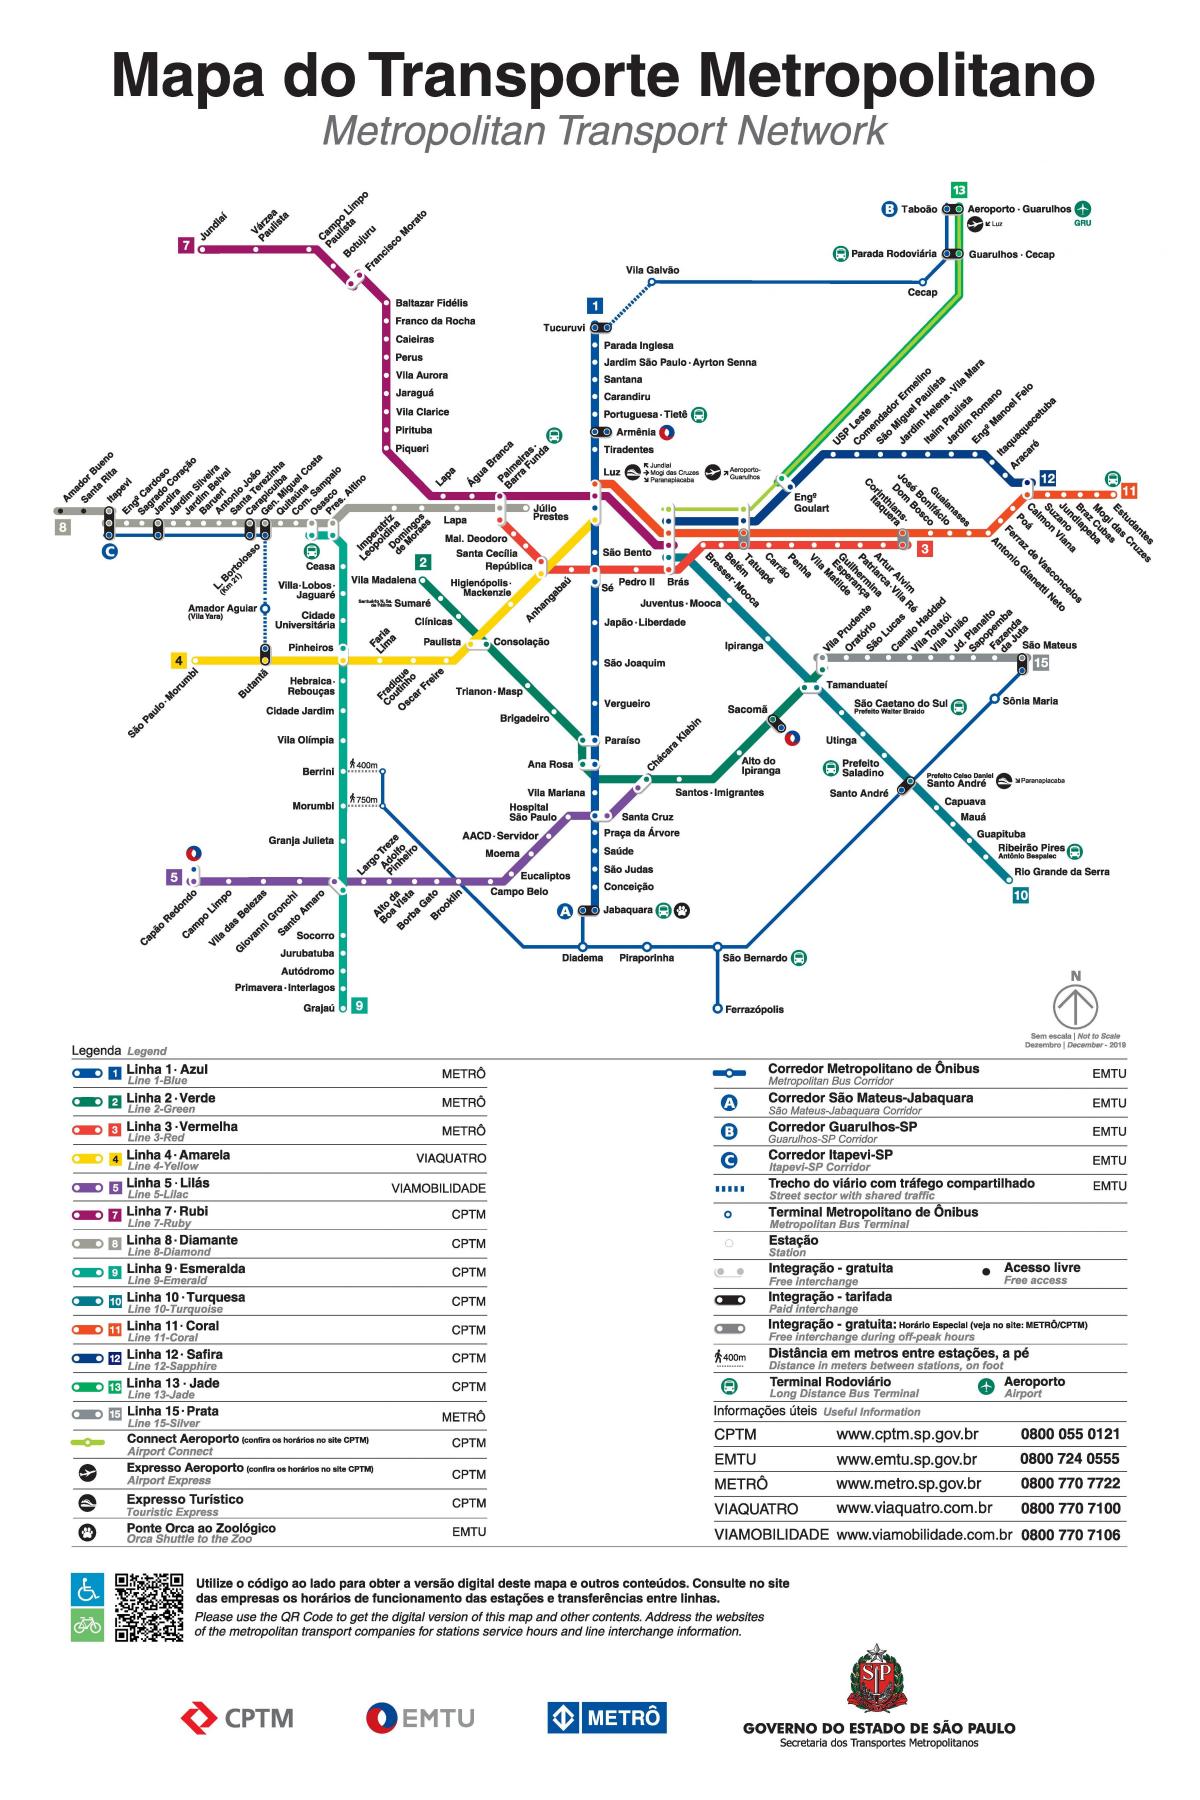 São Paulo railway stations map